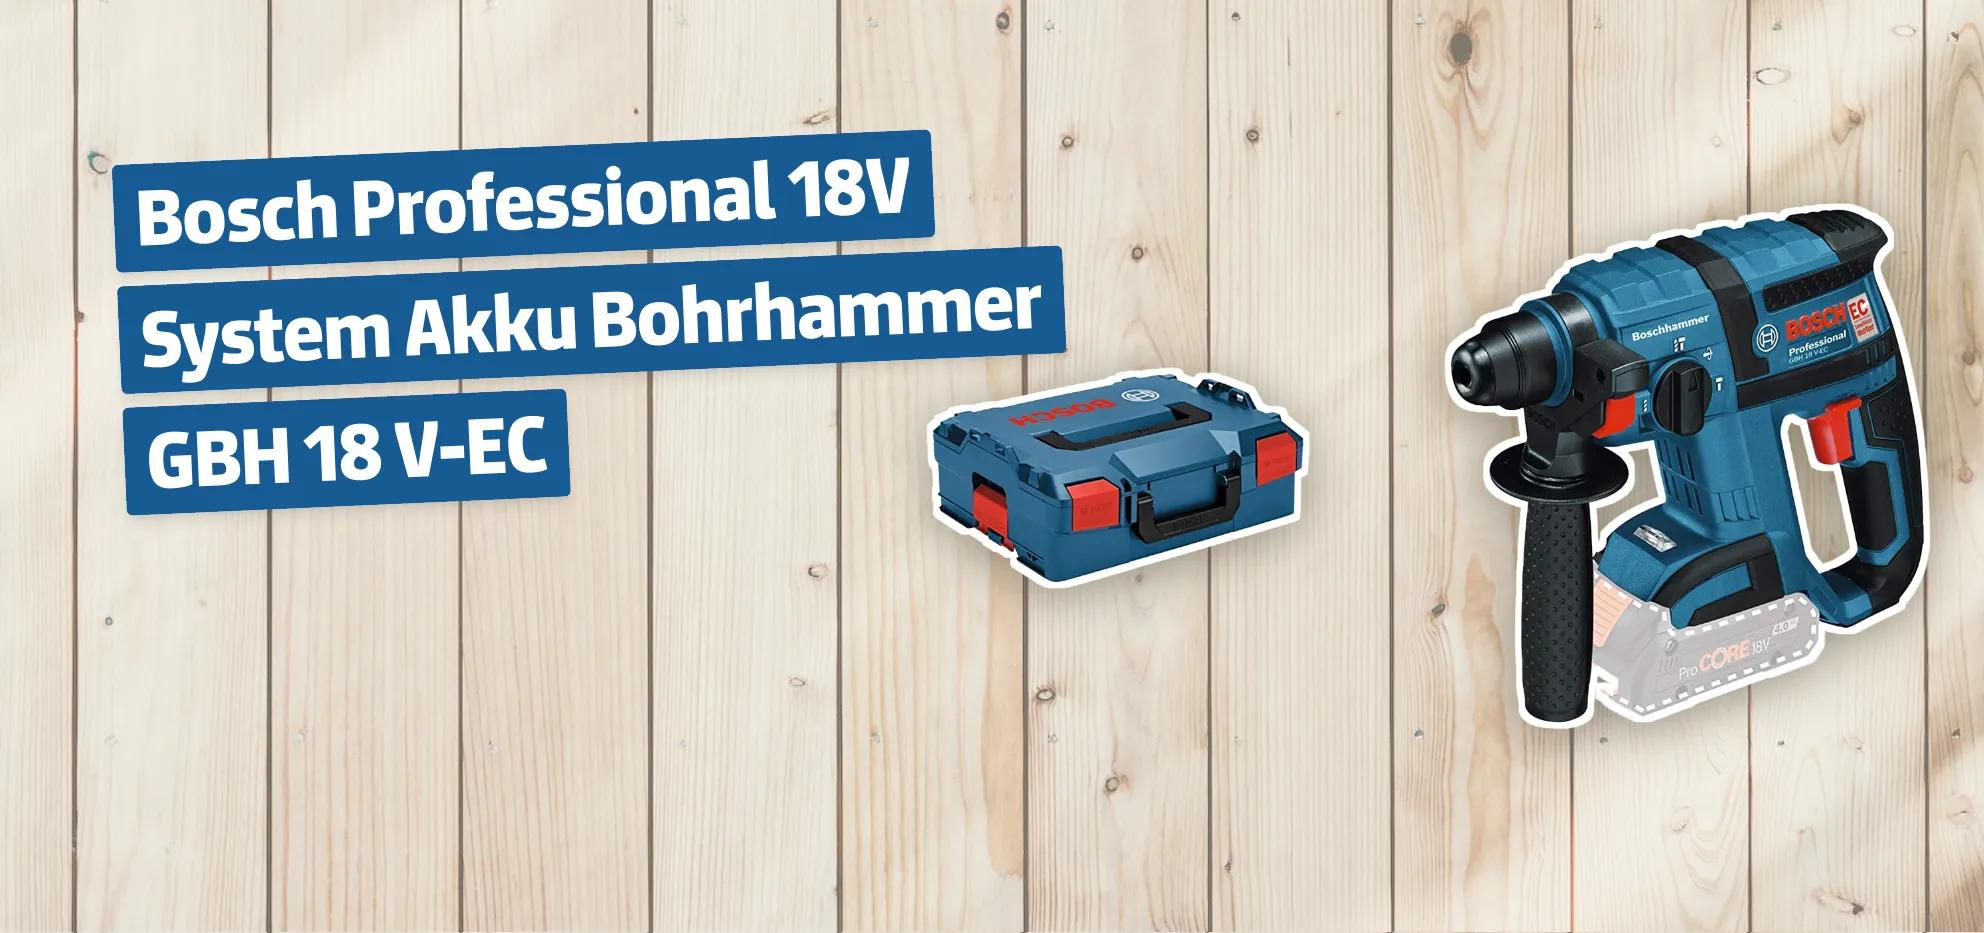 Bosch Professional 18V System Akku Bohrhammer GBH 18 V-EC